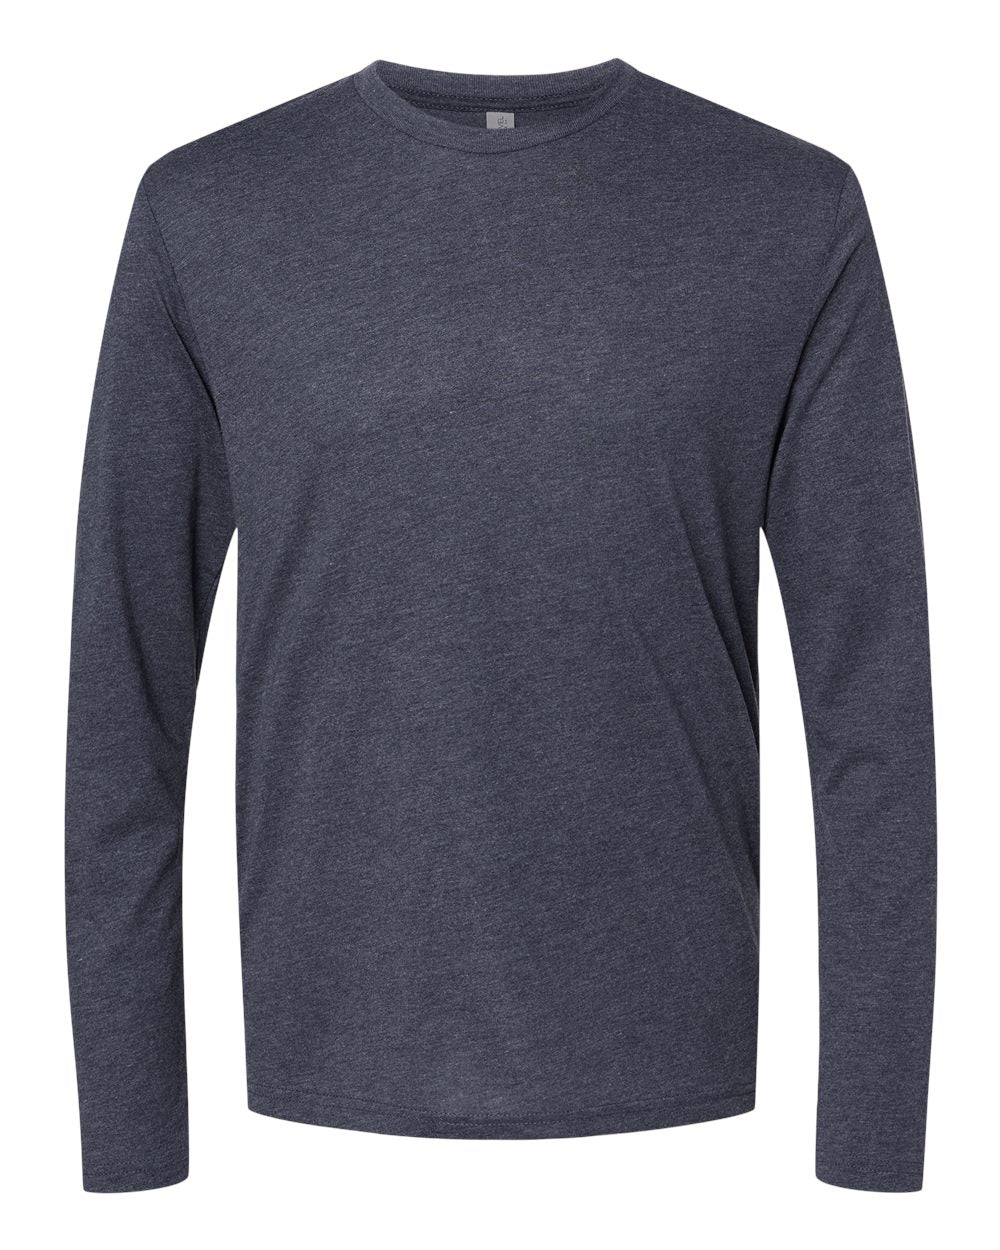 Next Level - Unisex Triblend Long Sleeve T-Shirt - 6071